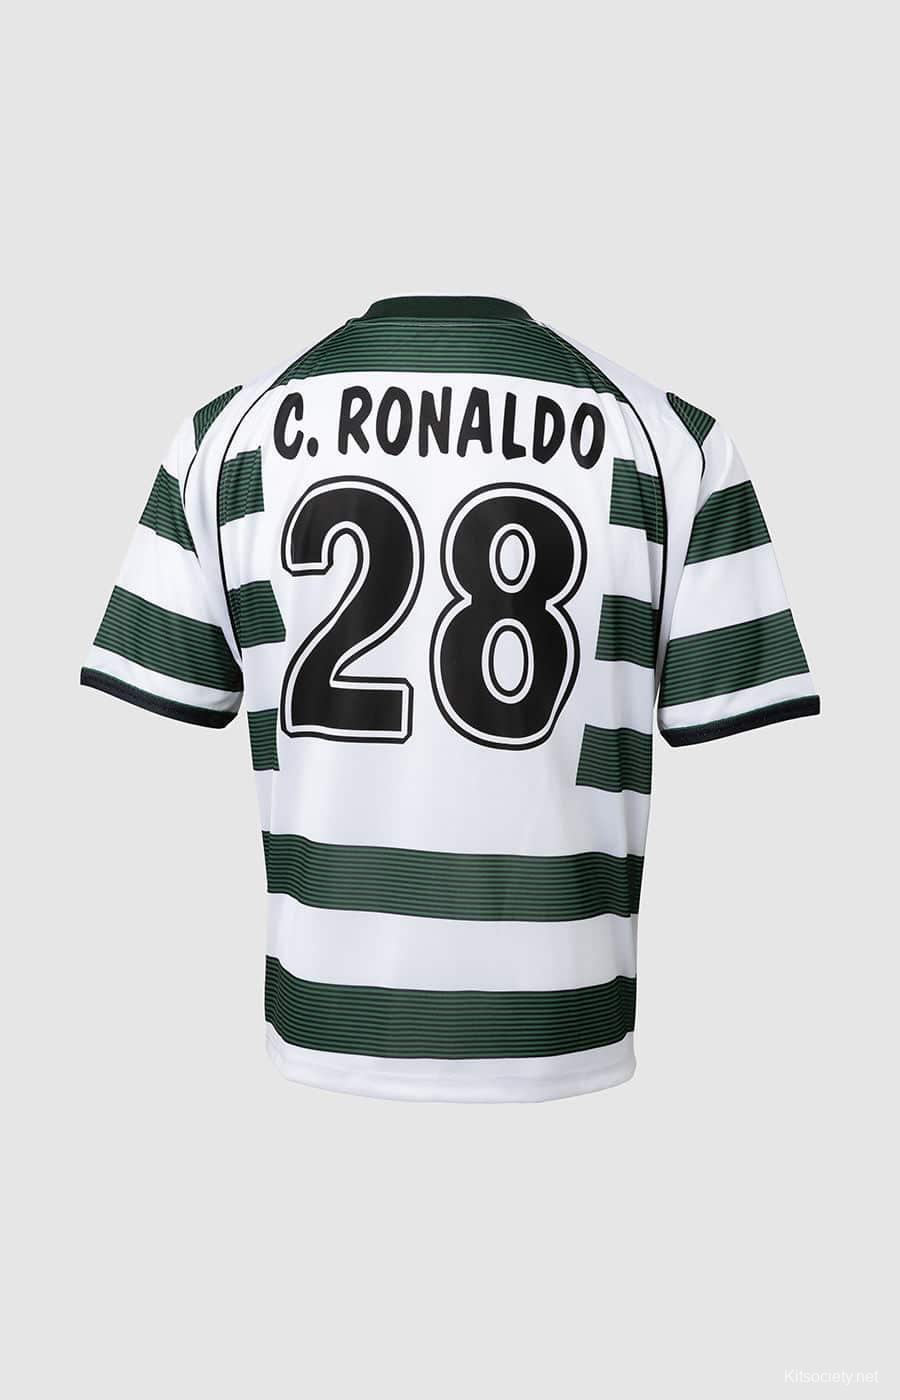 cr7 ronaldo jersey